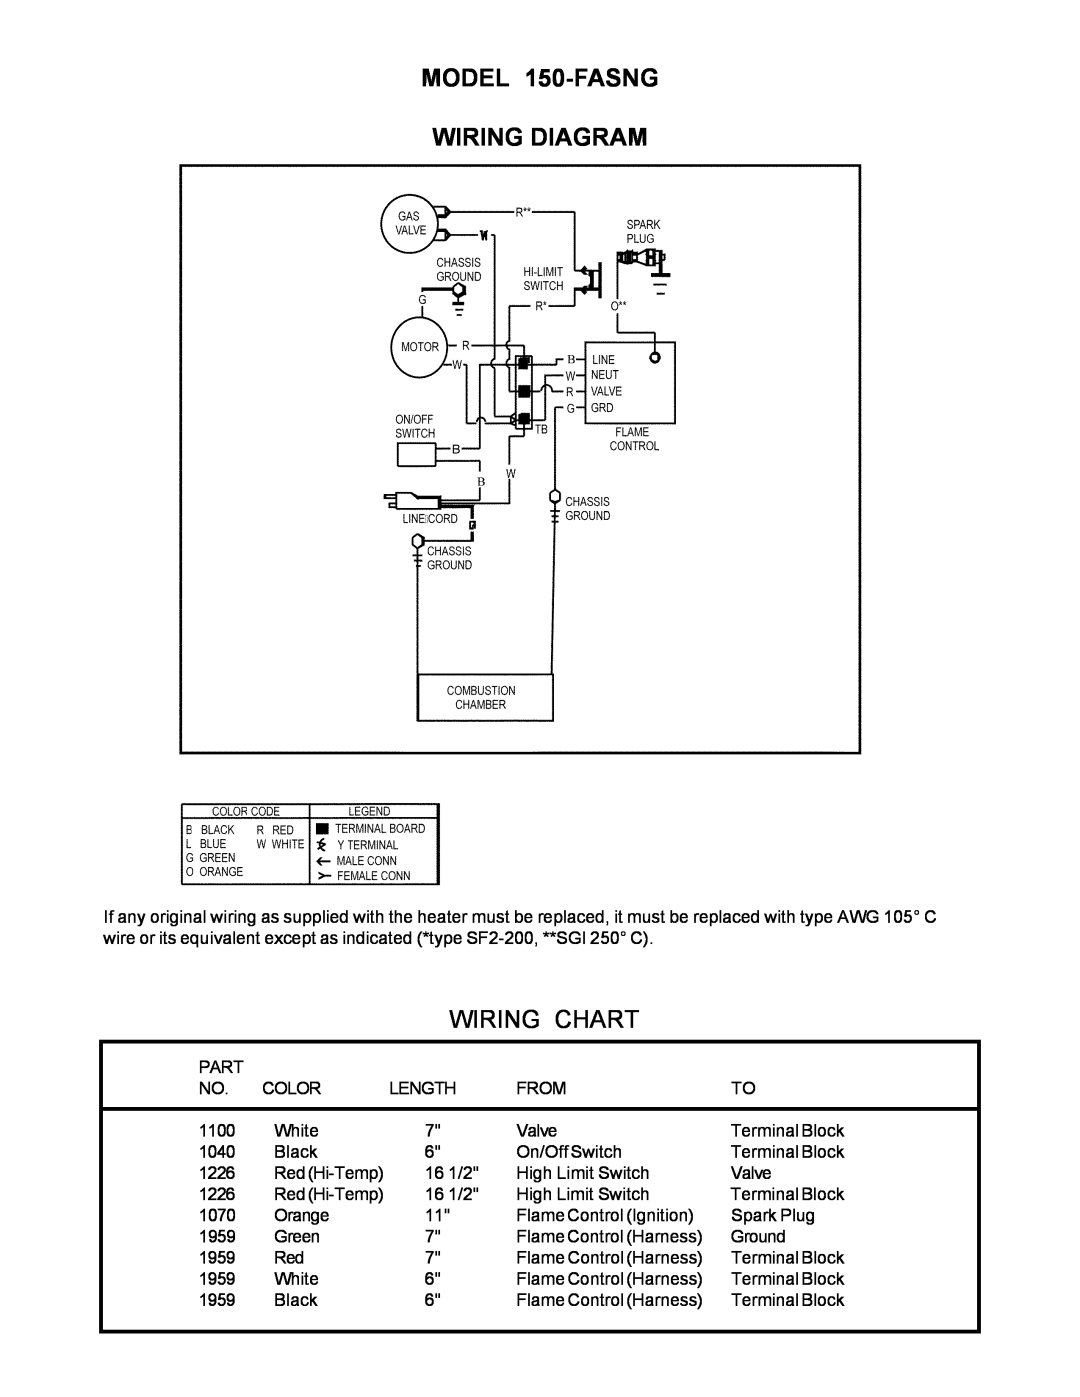 Universal owner manual MODEL 150-FASNG WIRING DIAGRAM, Wiring Chart 